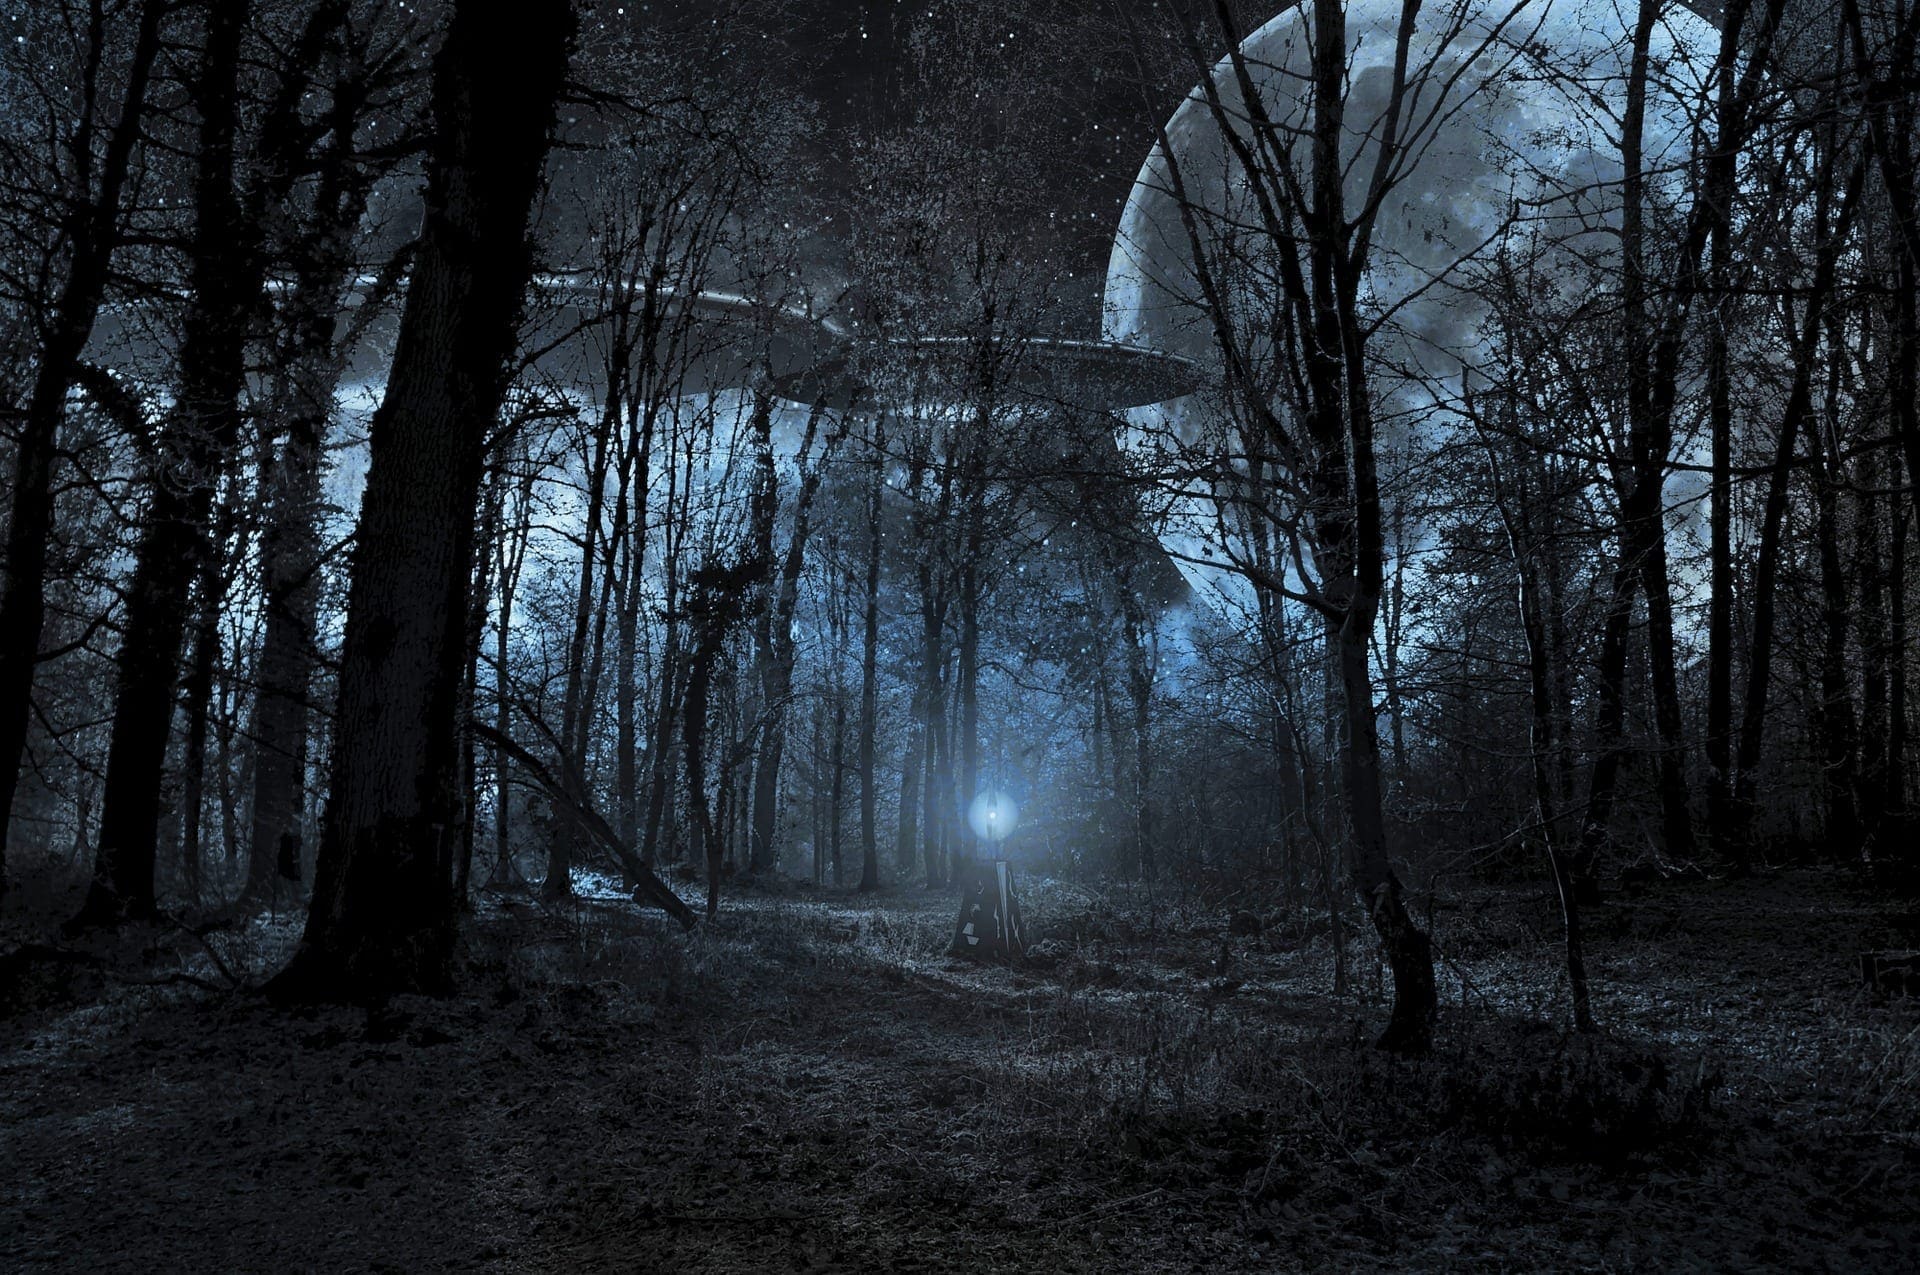 UFO? by moonlight through tree shadows